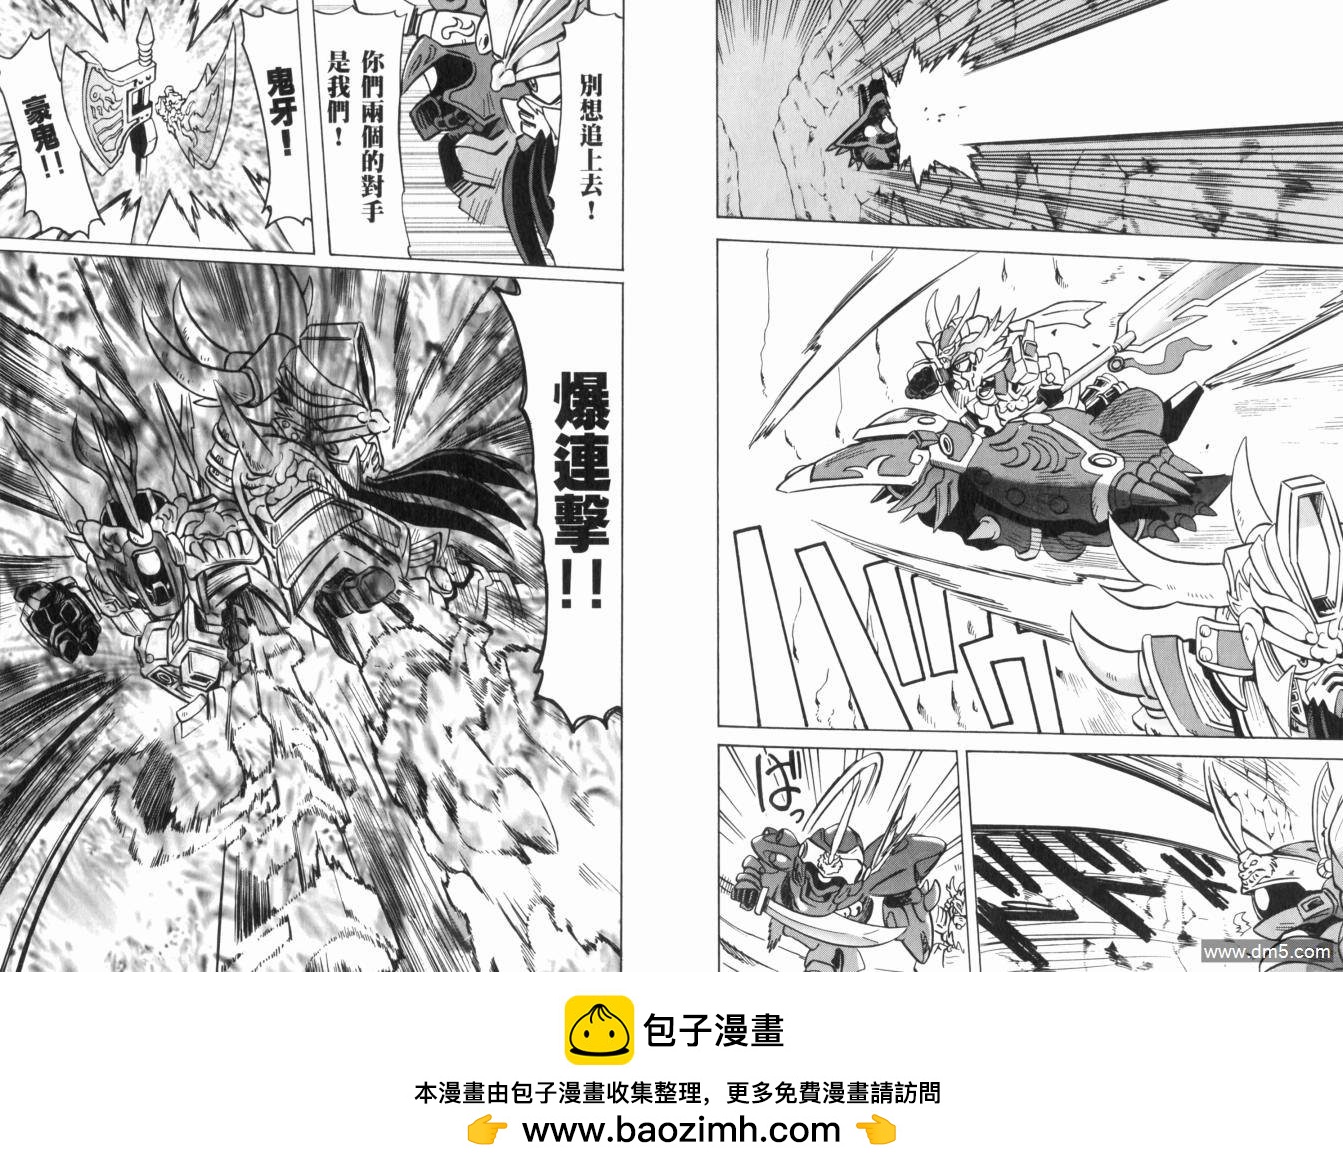 BB戰士三國傳戰神決鬥篇 - 第2卷(1/2) - 2